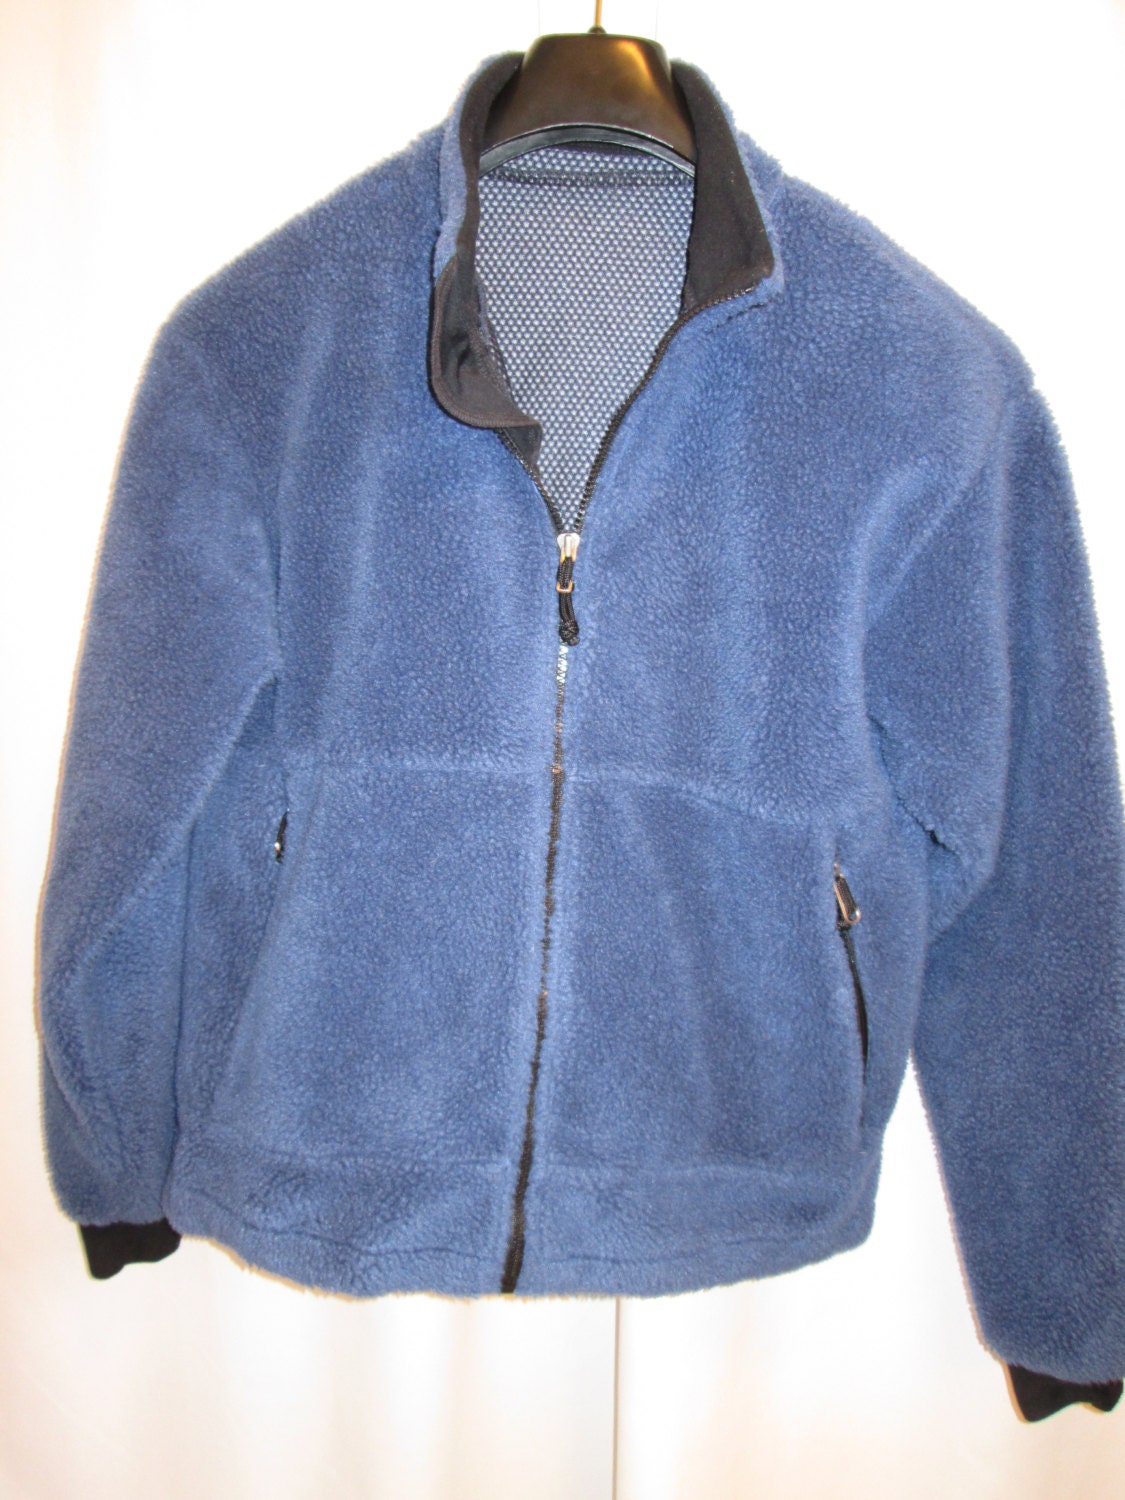 vintage CAGOULE deep pile full zip fleece jacket with wind